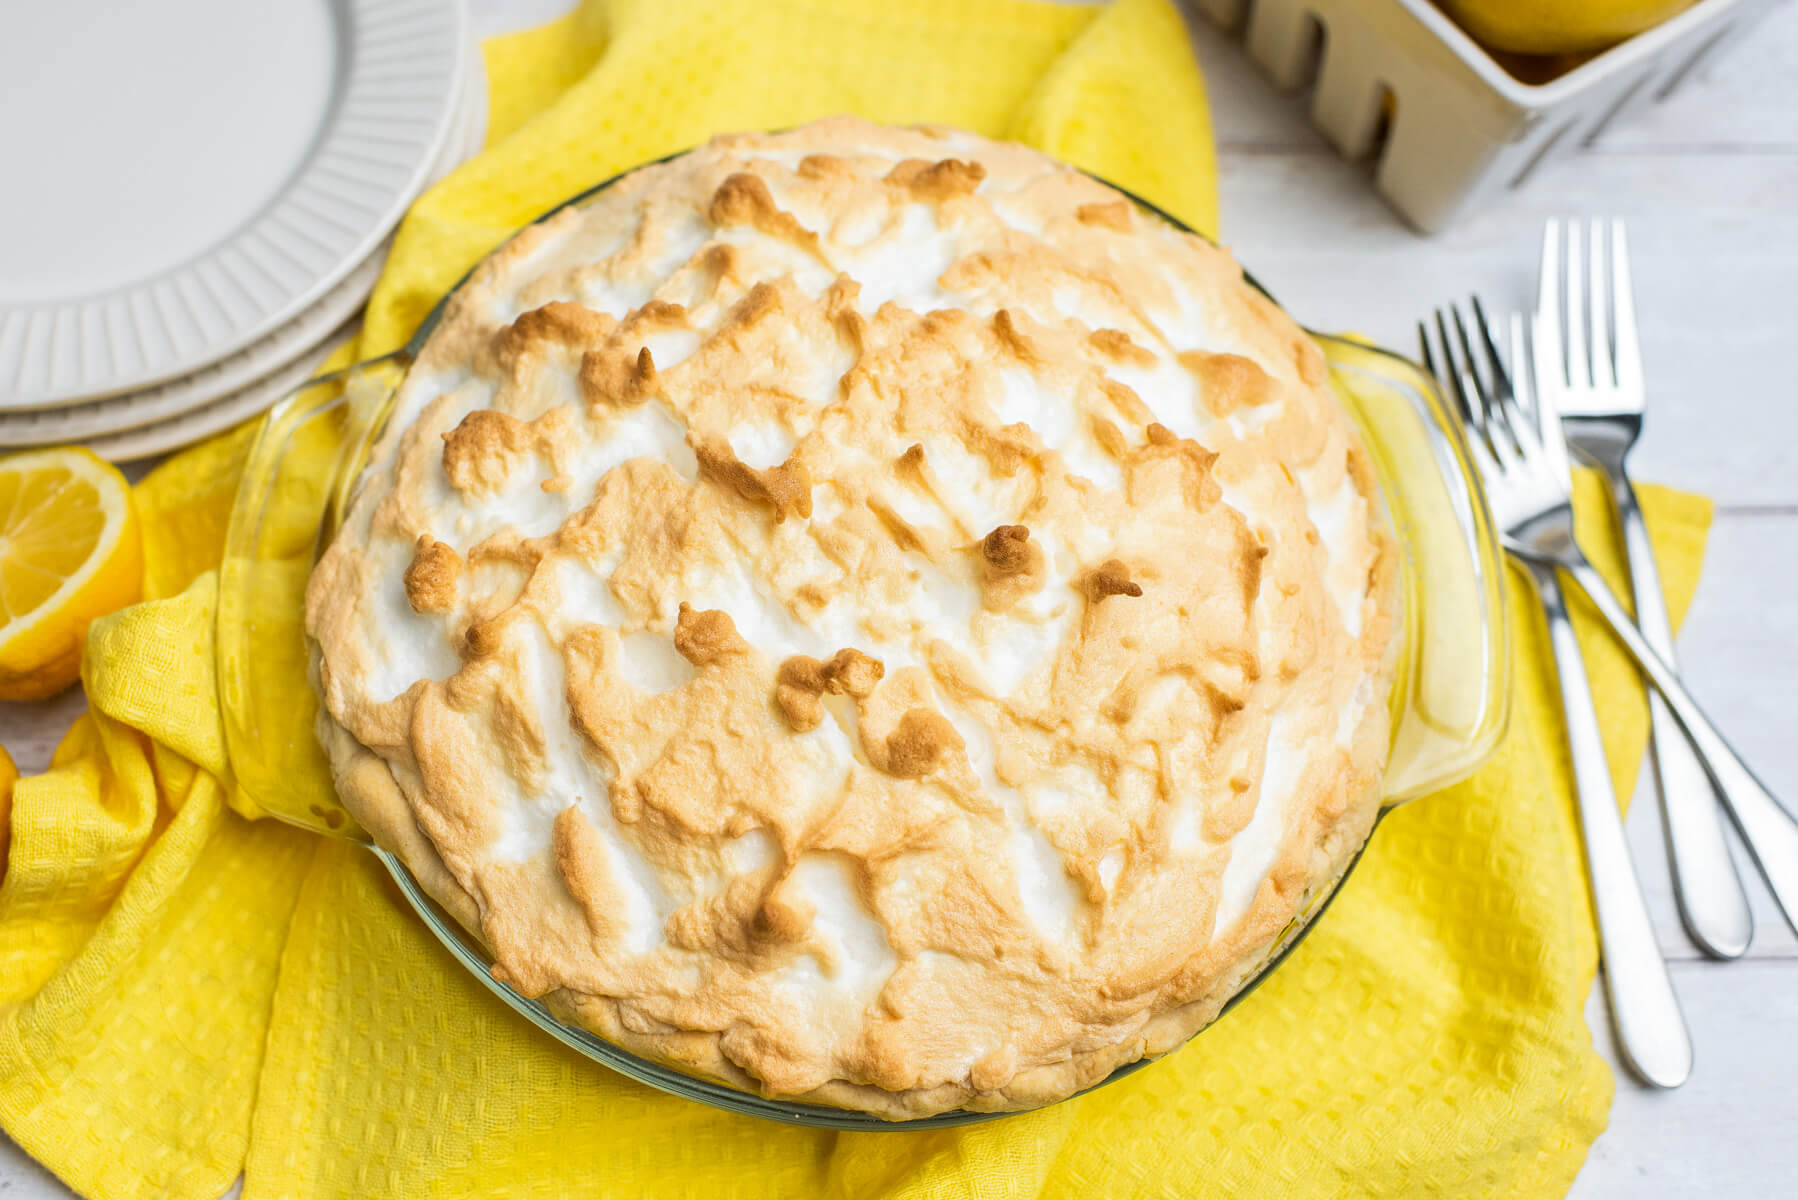 A fully baked lemon meringue pie ready to serve.